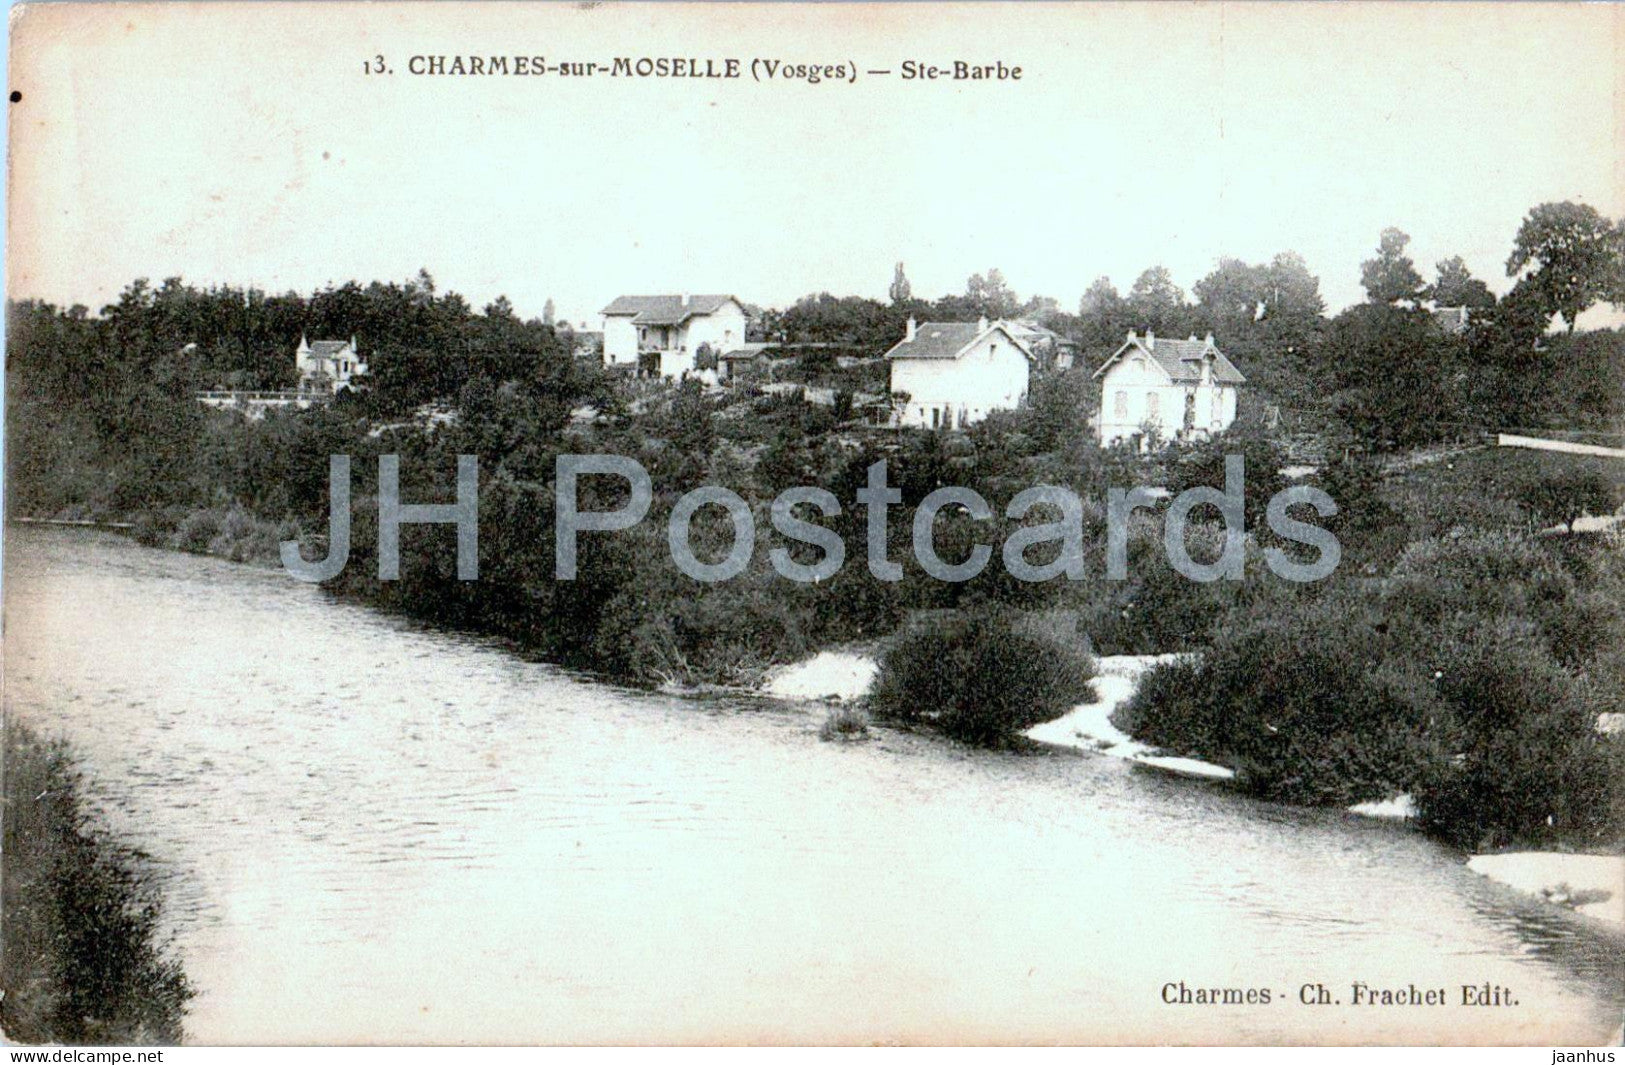 Charmes sur Moselle - Ste Barbe - 13 - old postcard - 1915 - France - used - JH Postcards